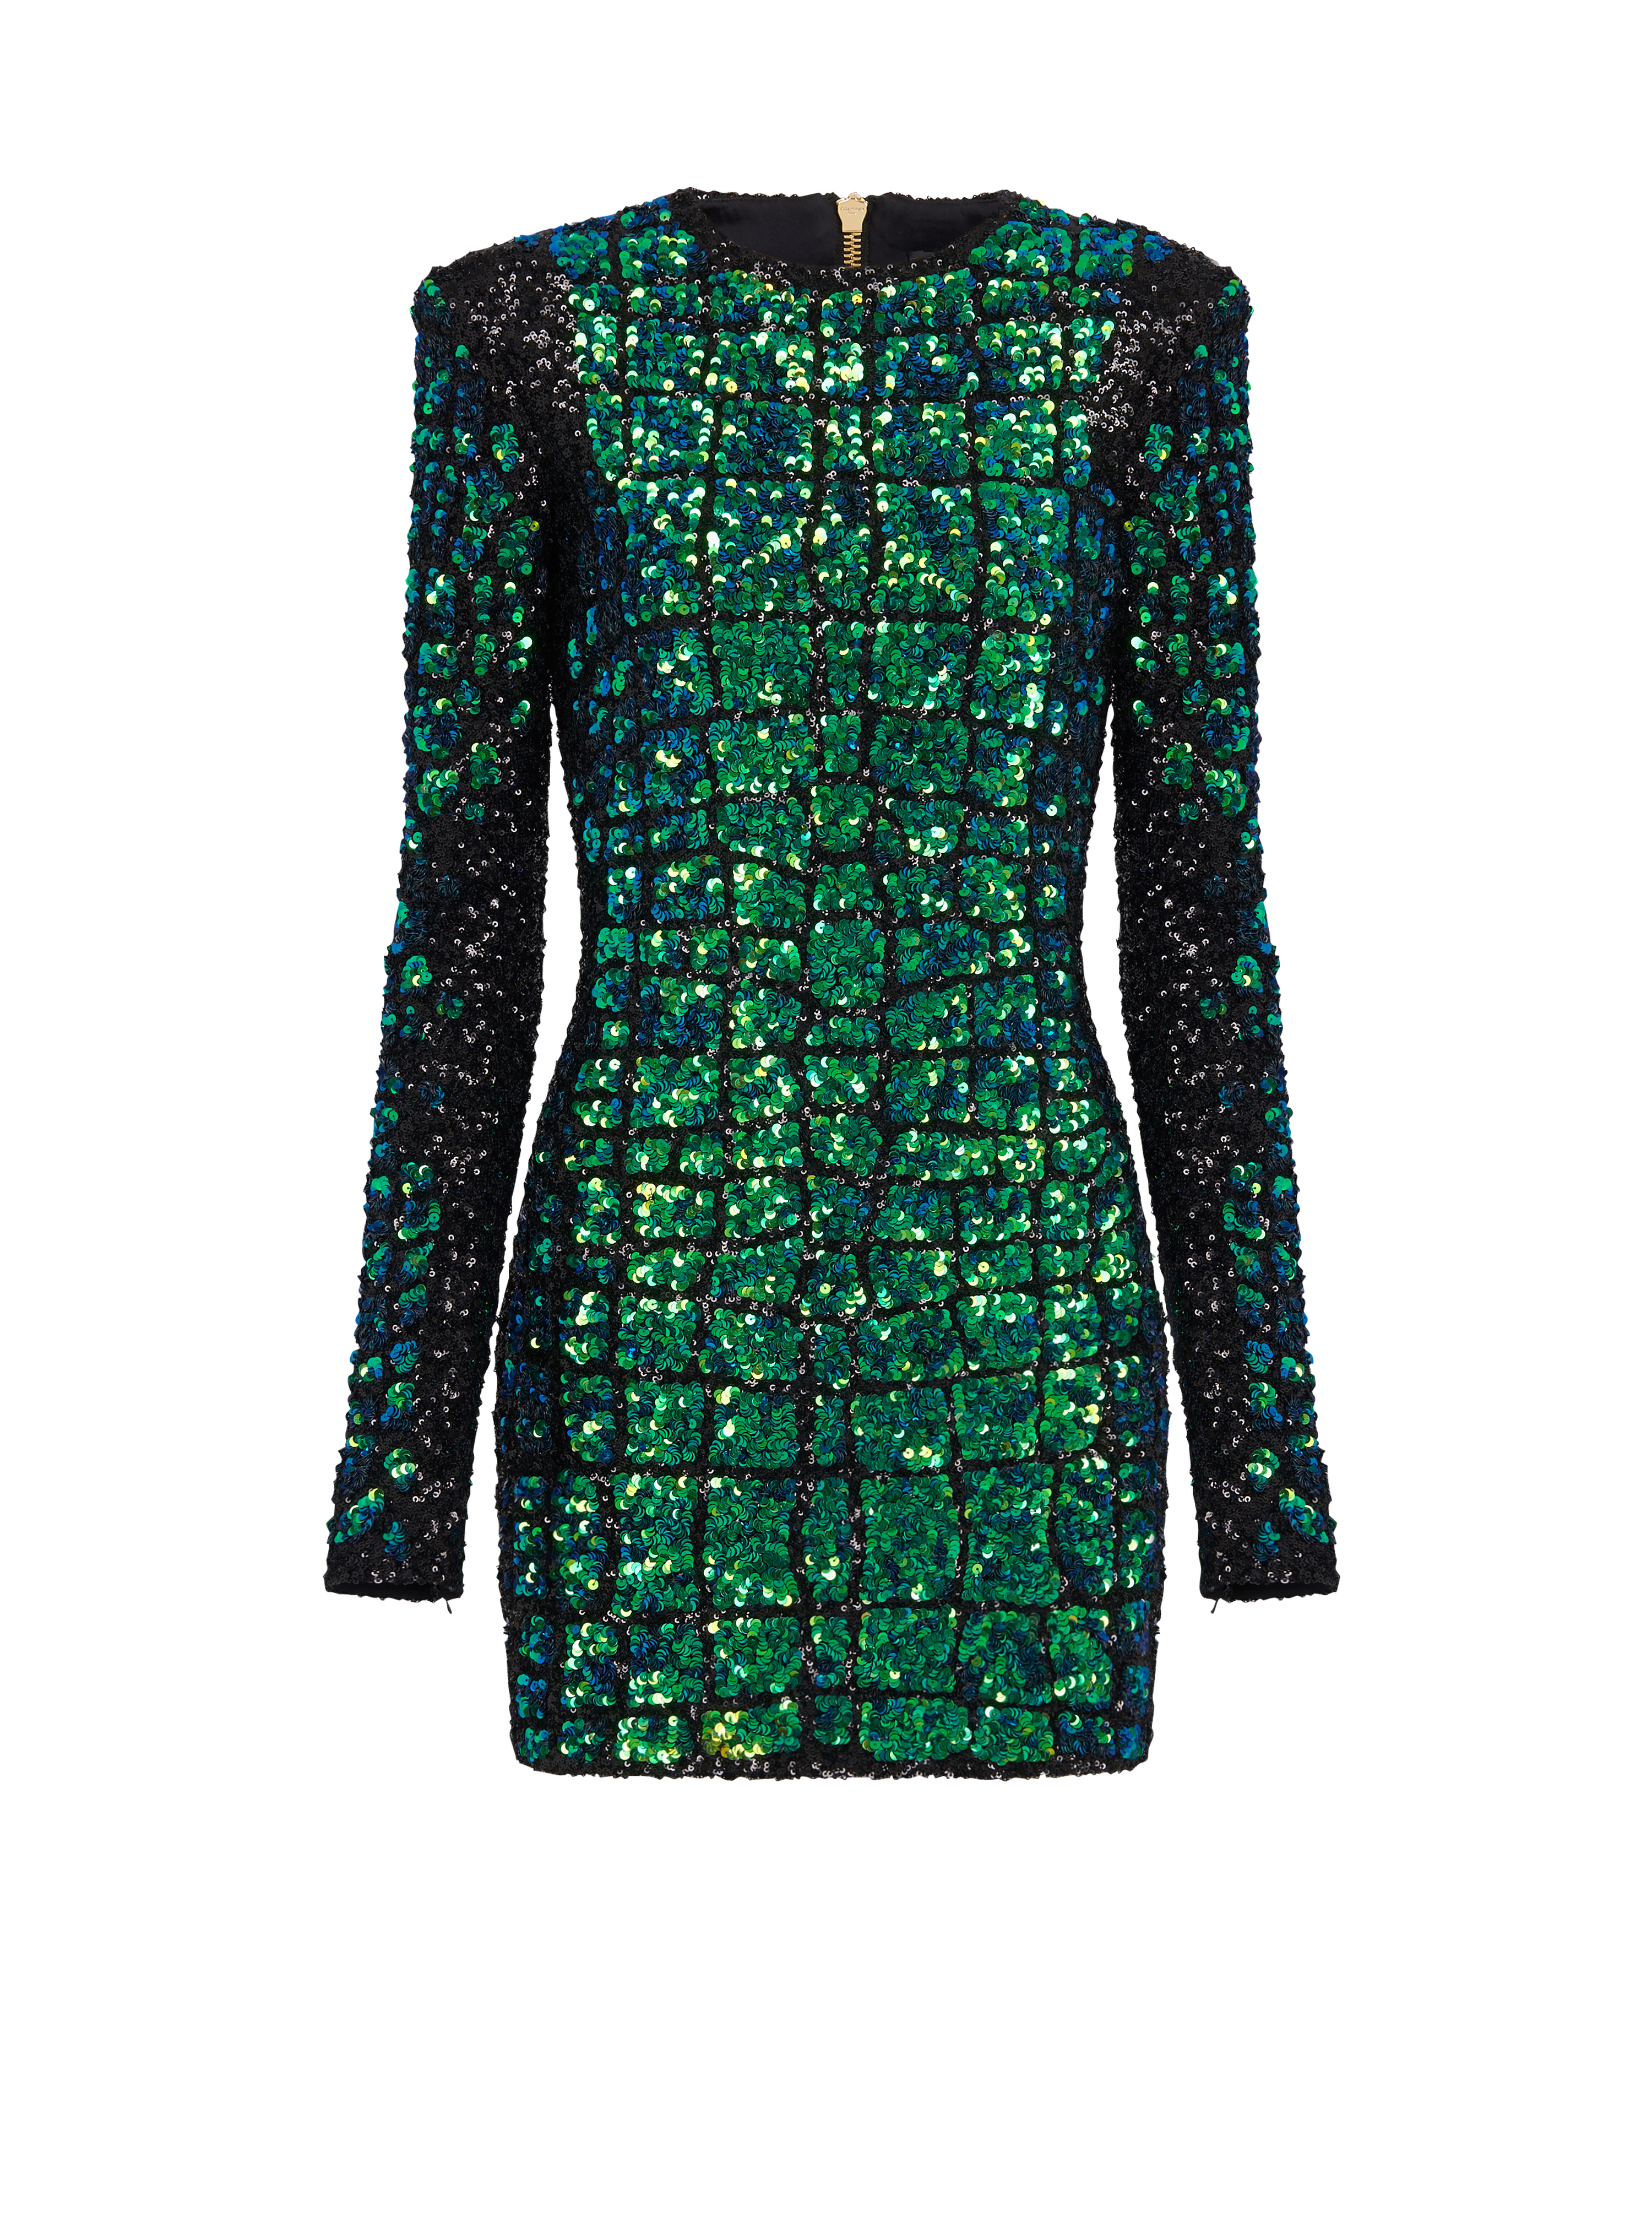 Iridescent crocodile embroidered dress, green